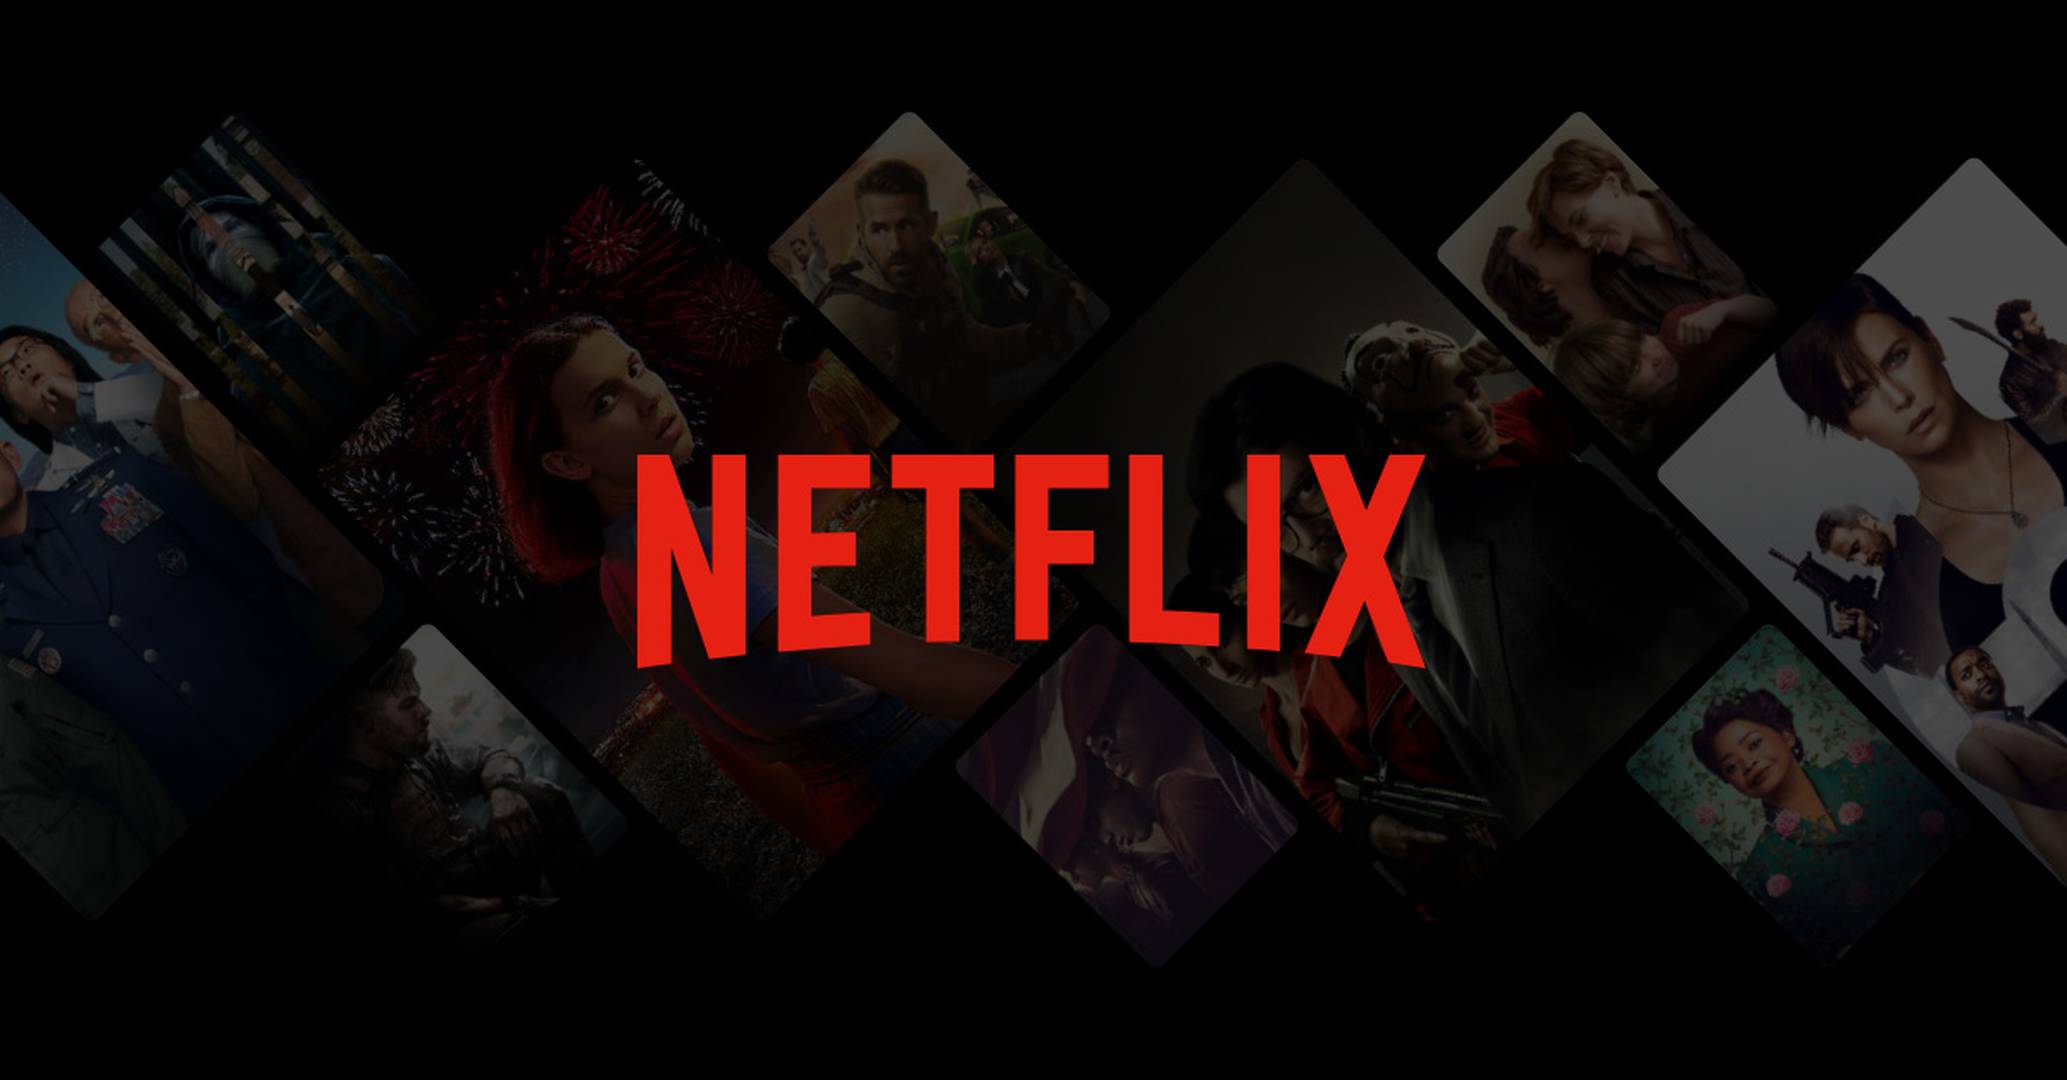 Netflix闖入遊戲領域，會重蹈谷歌、亞馬遜覆轍嗎？